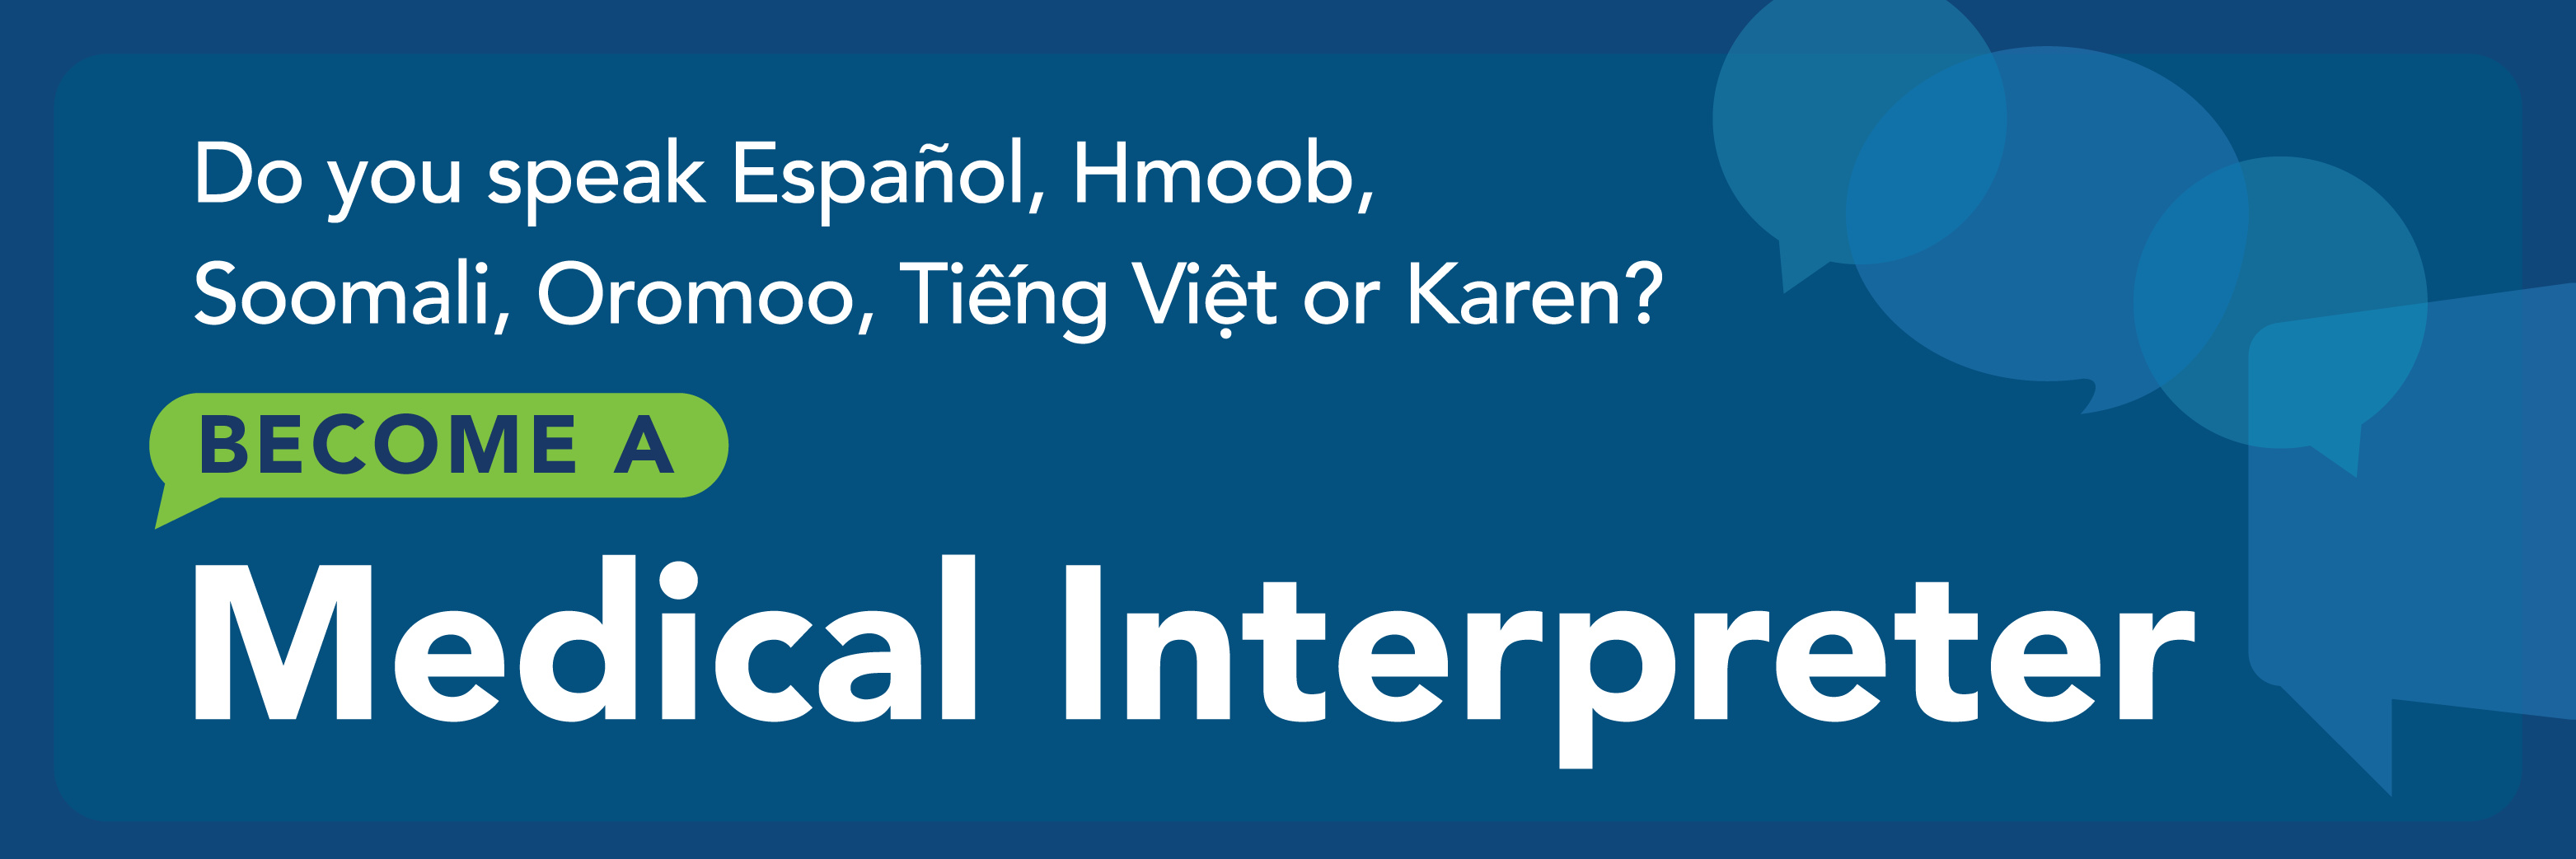 Do you speak Espanol, Hmoob, Soomali, Oromoo, Tieng Viet or Karen? Become a medical interpreter.